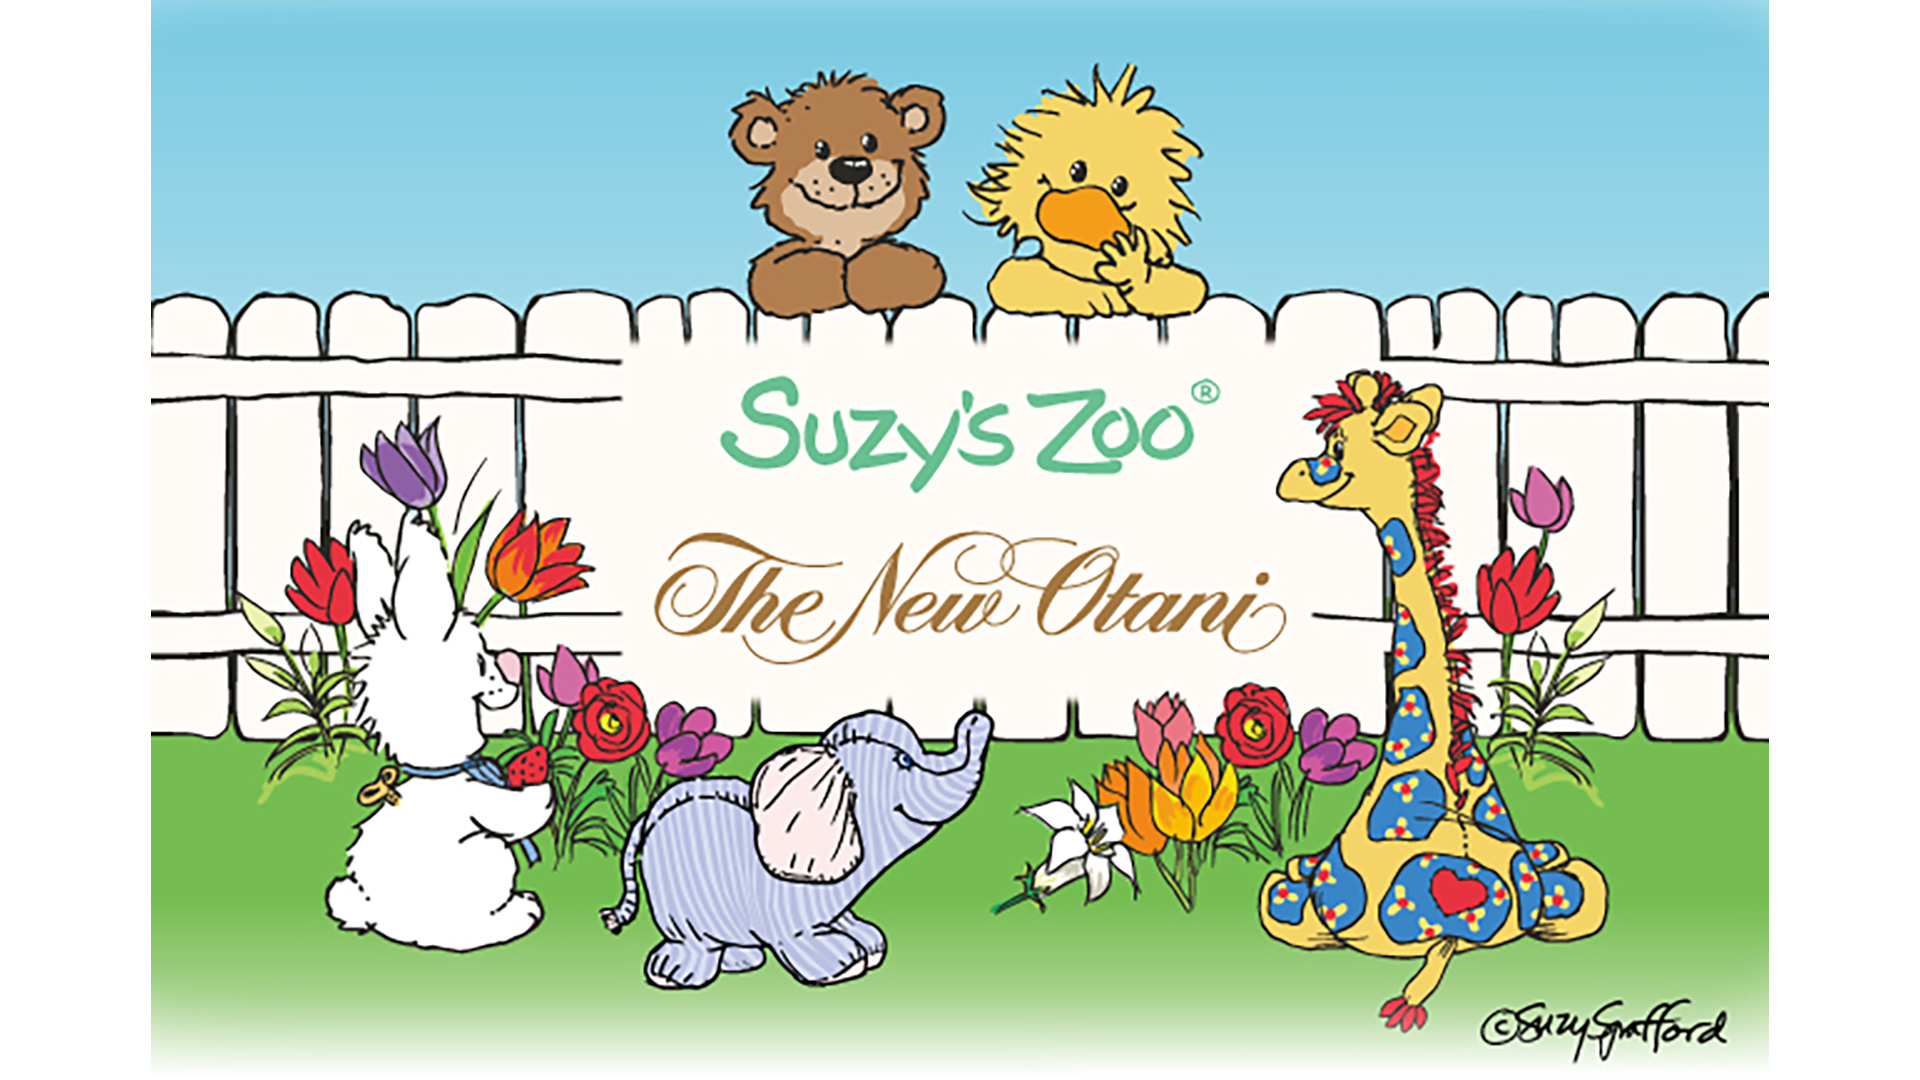 Suzy's Zoo コラボレーションルーム【インターネット予約限定】